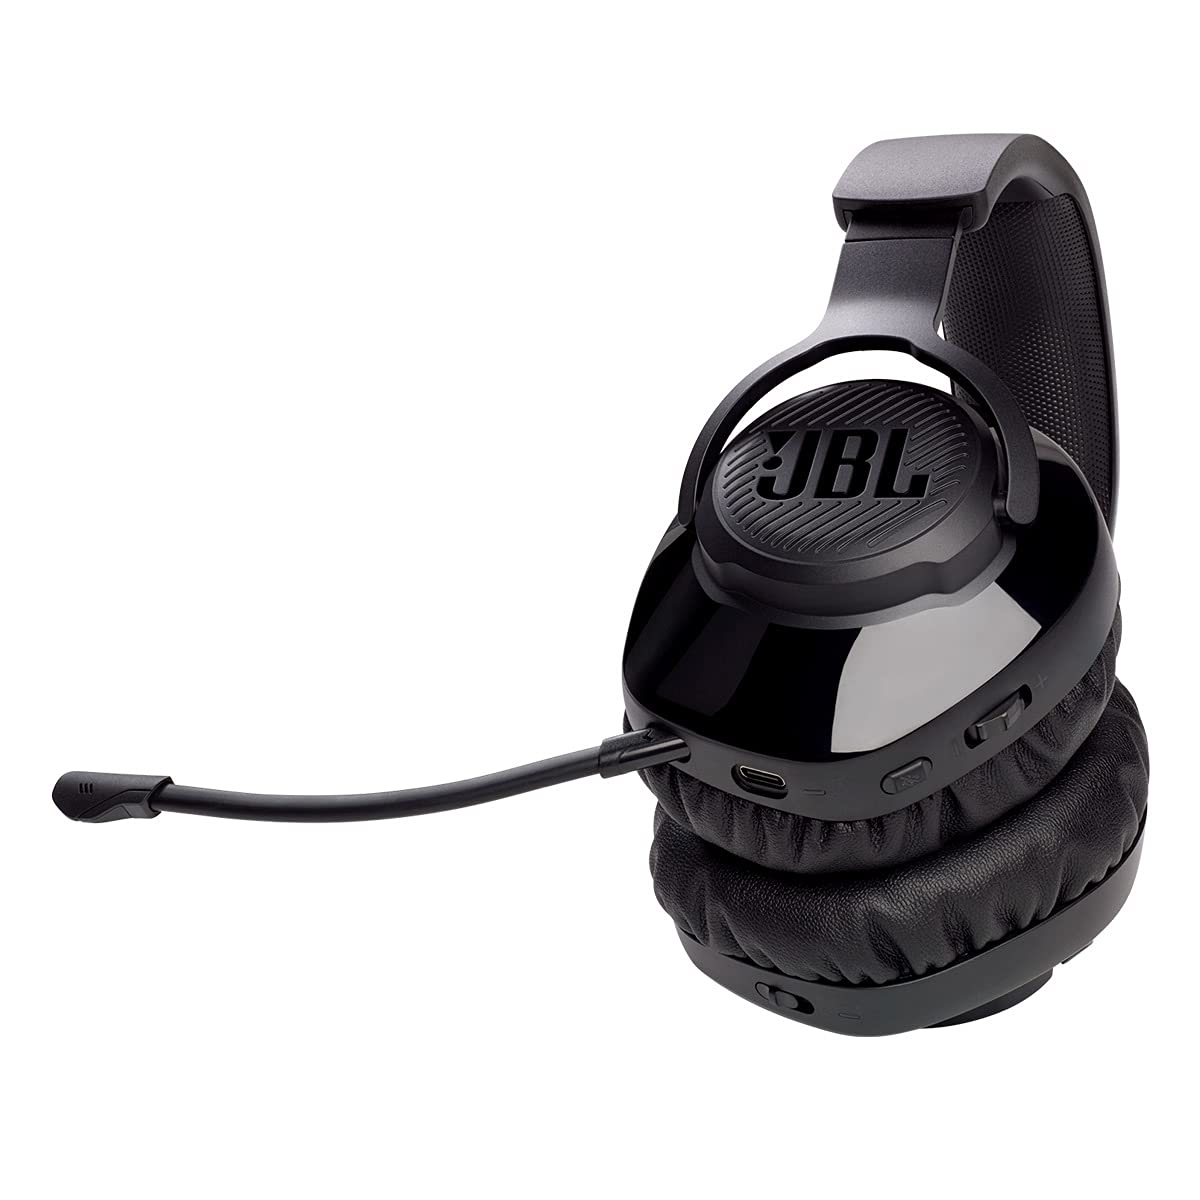 JBL Quantum 350 - Wireless PC Gaming Headset with Detachable Boom mic (Renewed)